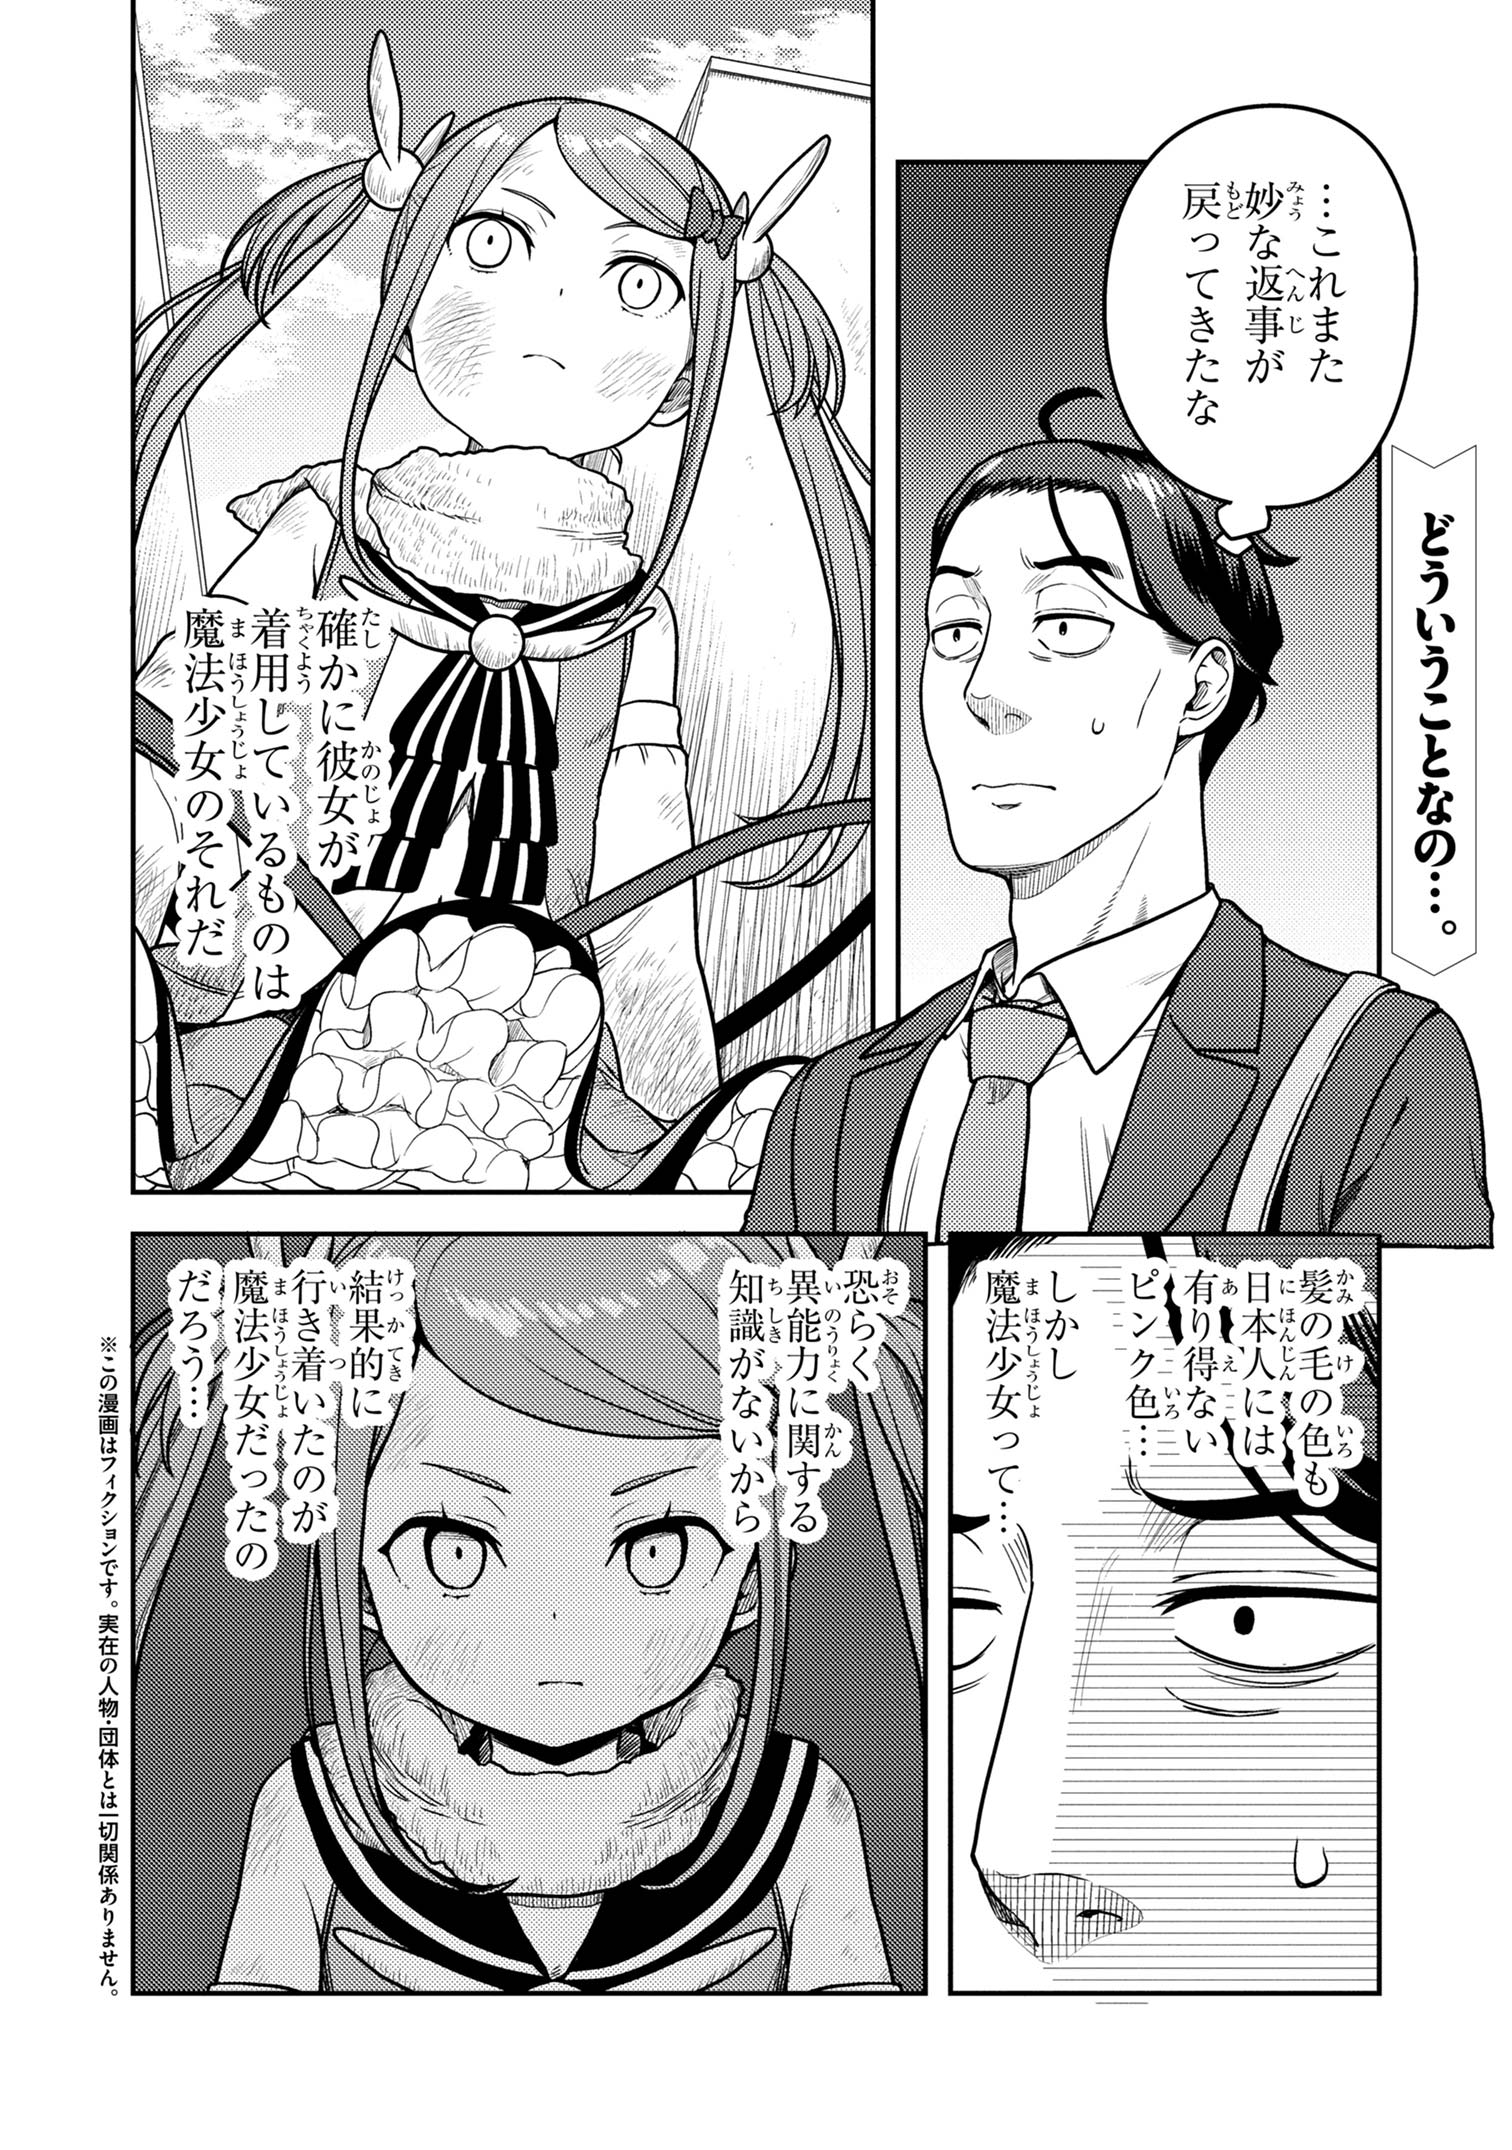 Sasaki to Pii-chan - Chapter 17.2 - Page 1